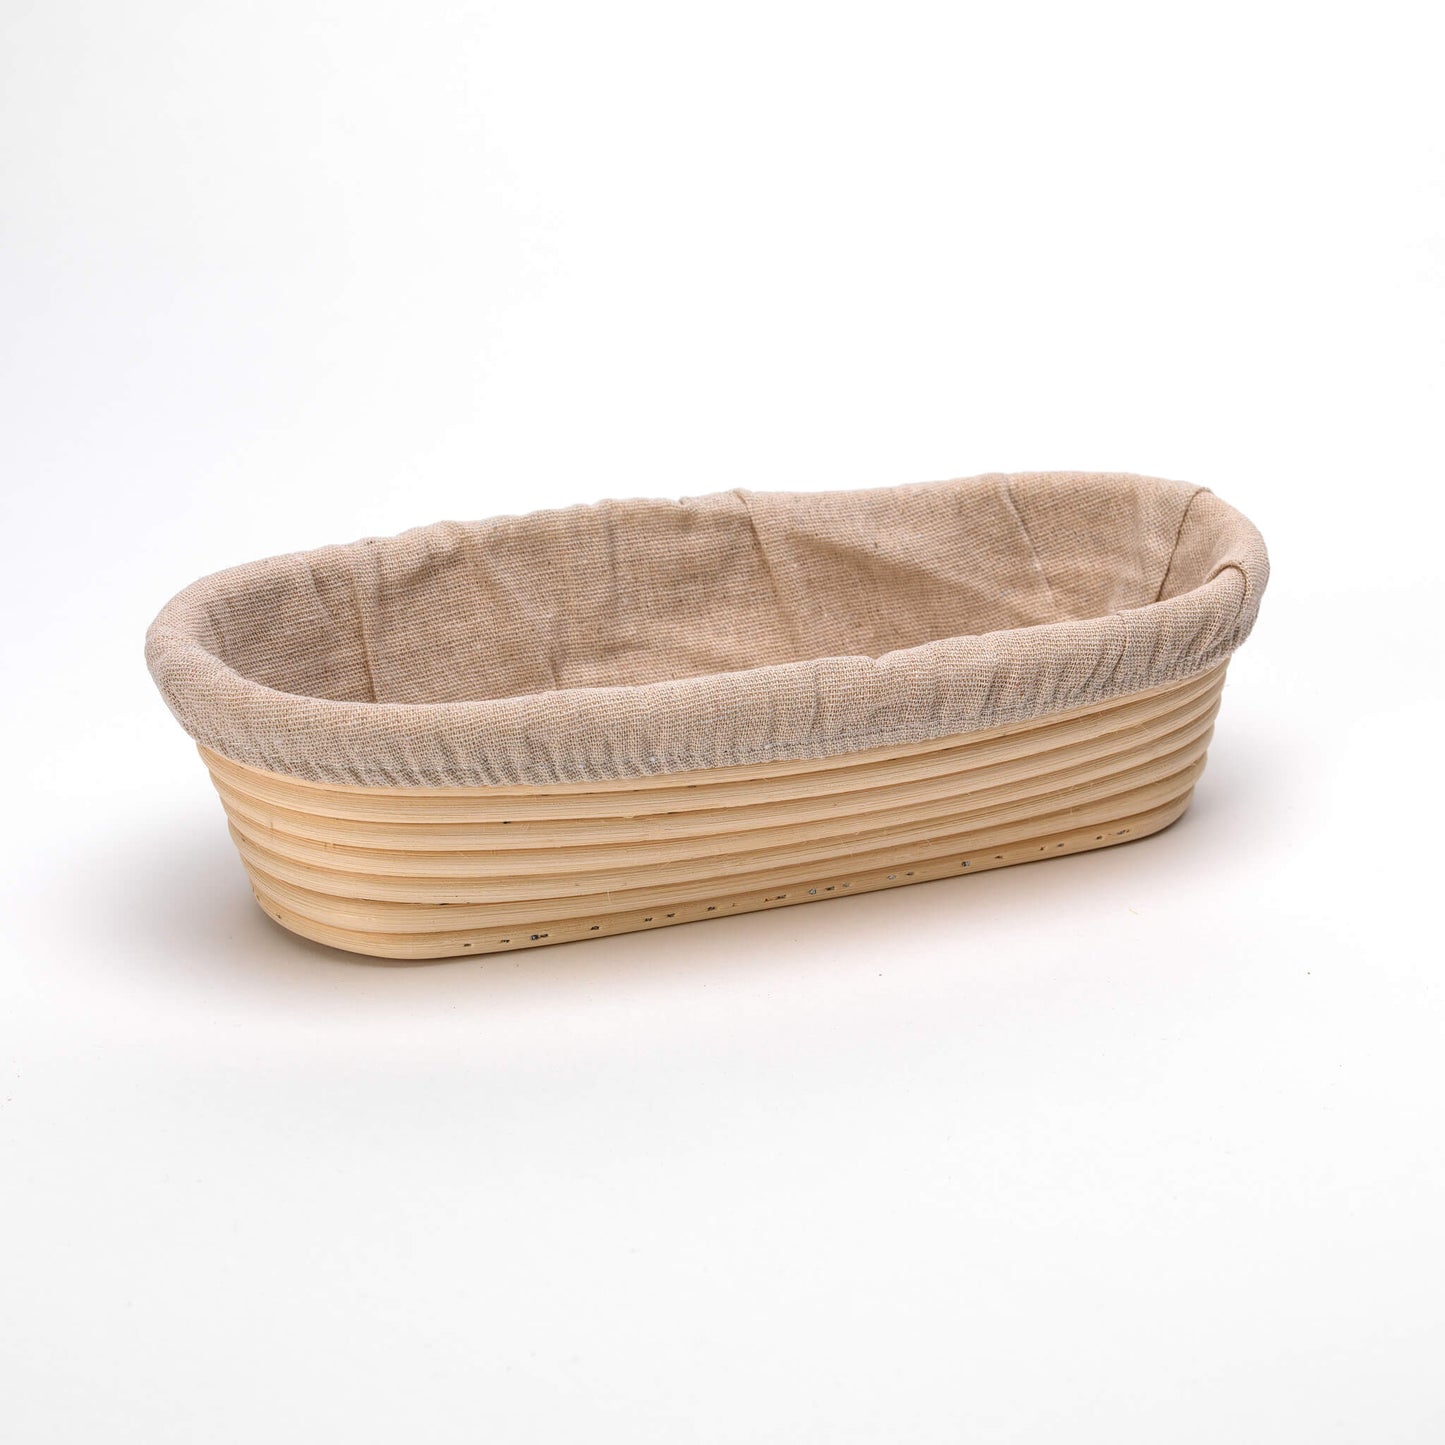 1kg / 2.2lb Oval 30cm Long Rattan Cane Banneton with Liner  Bread Dough Proving Proofing Basket Brotform